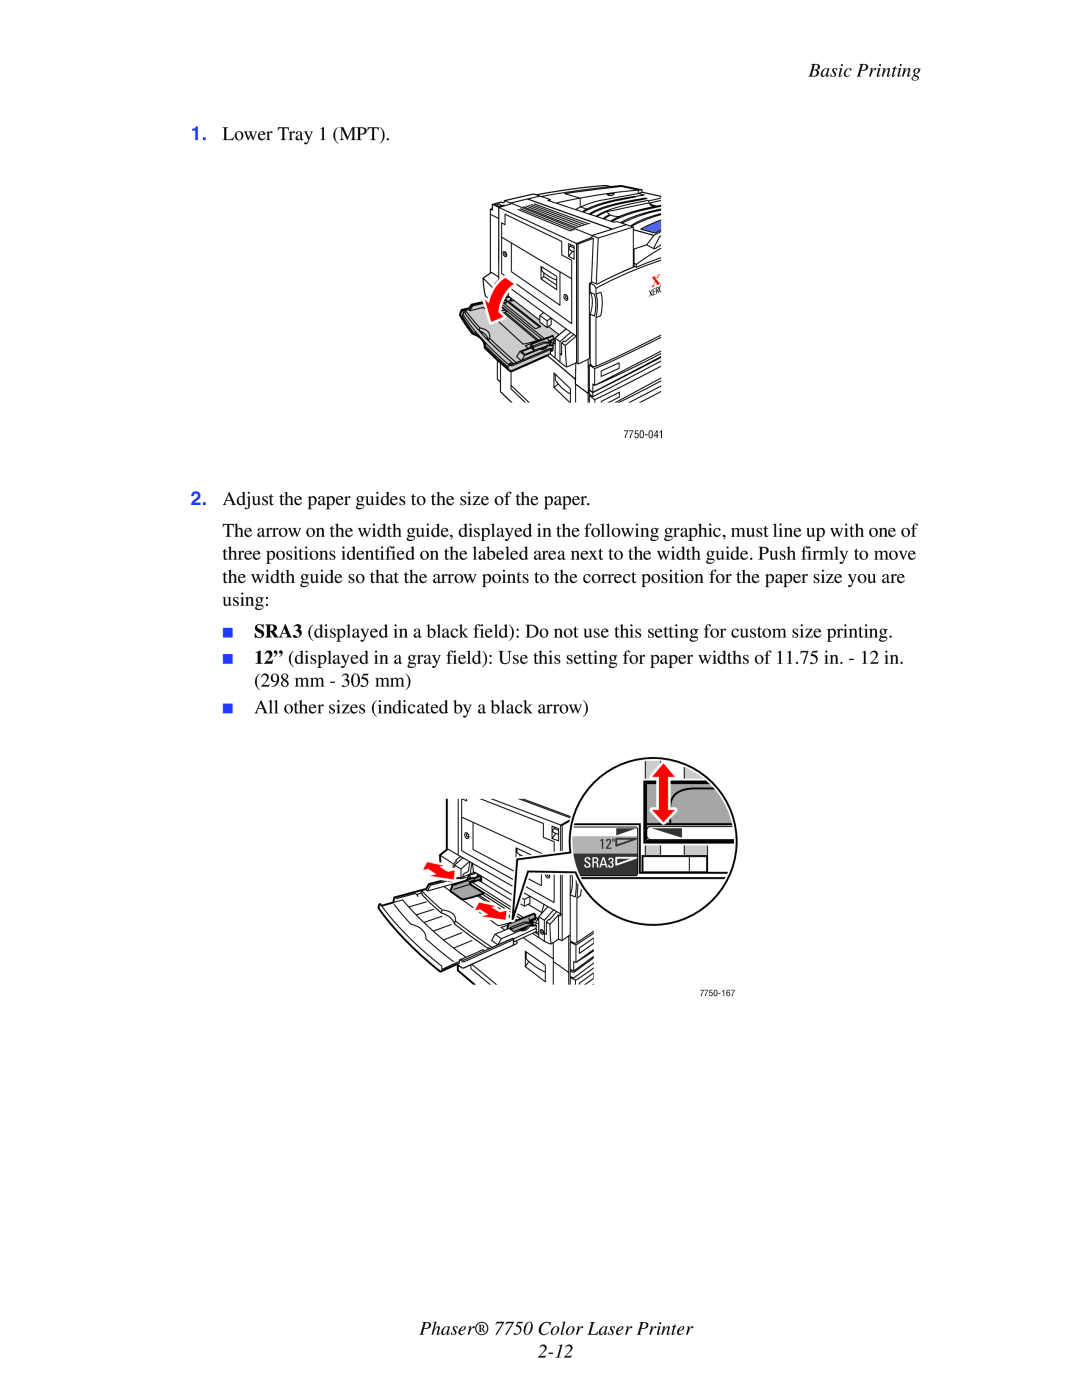 Xerox manual Basic Printing, Phaser 7750 Color Laser Printer 